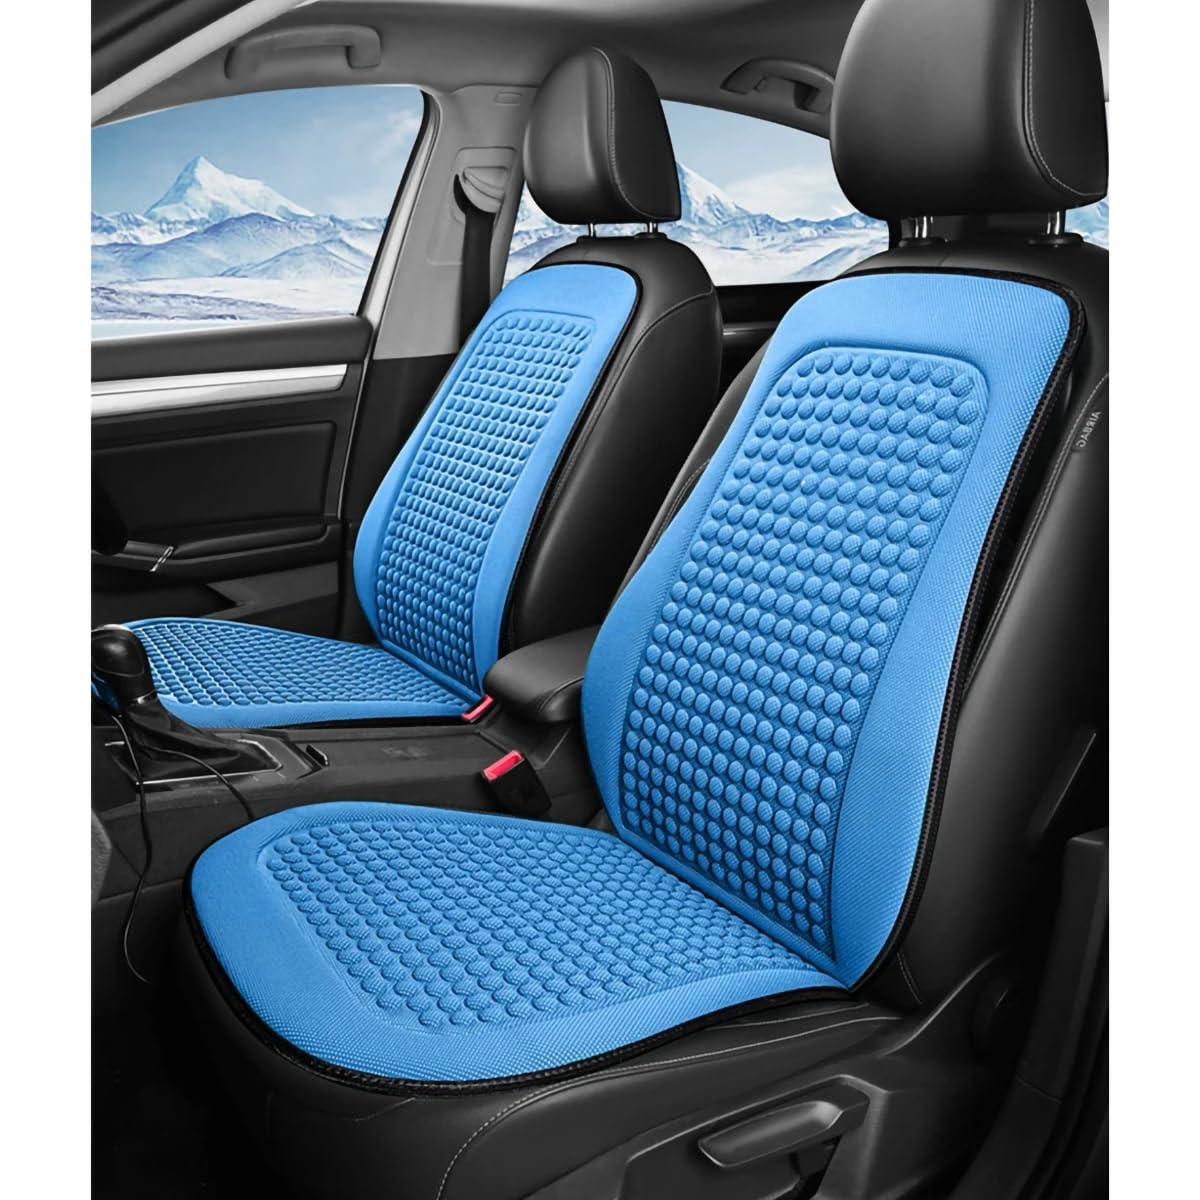 Spulhc Autositzbezug für Mercedes Benz C Class W205 2014-2018 2019 2020, kühles Sitzkissen aus Eisseide, kühlendes/atmungsaktives Kissen,D-blue-2 set von Spulhc